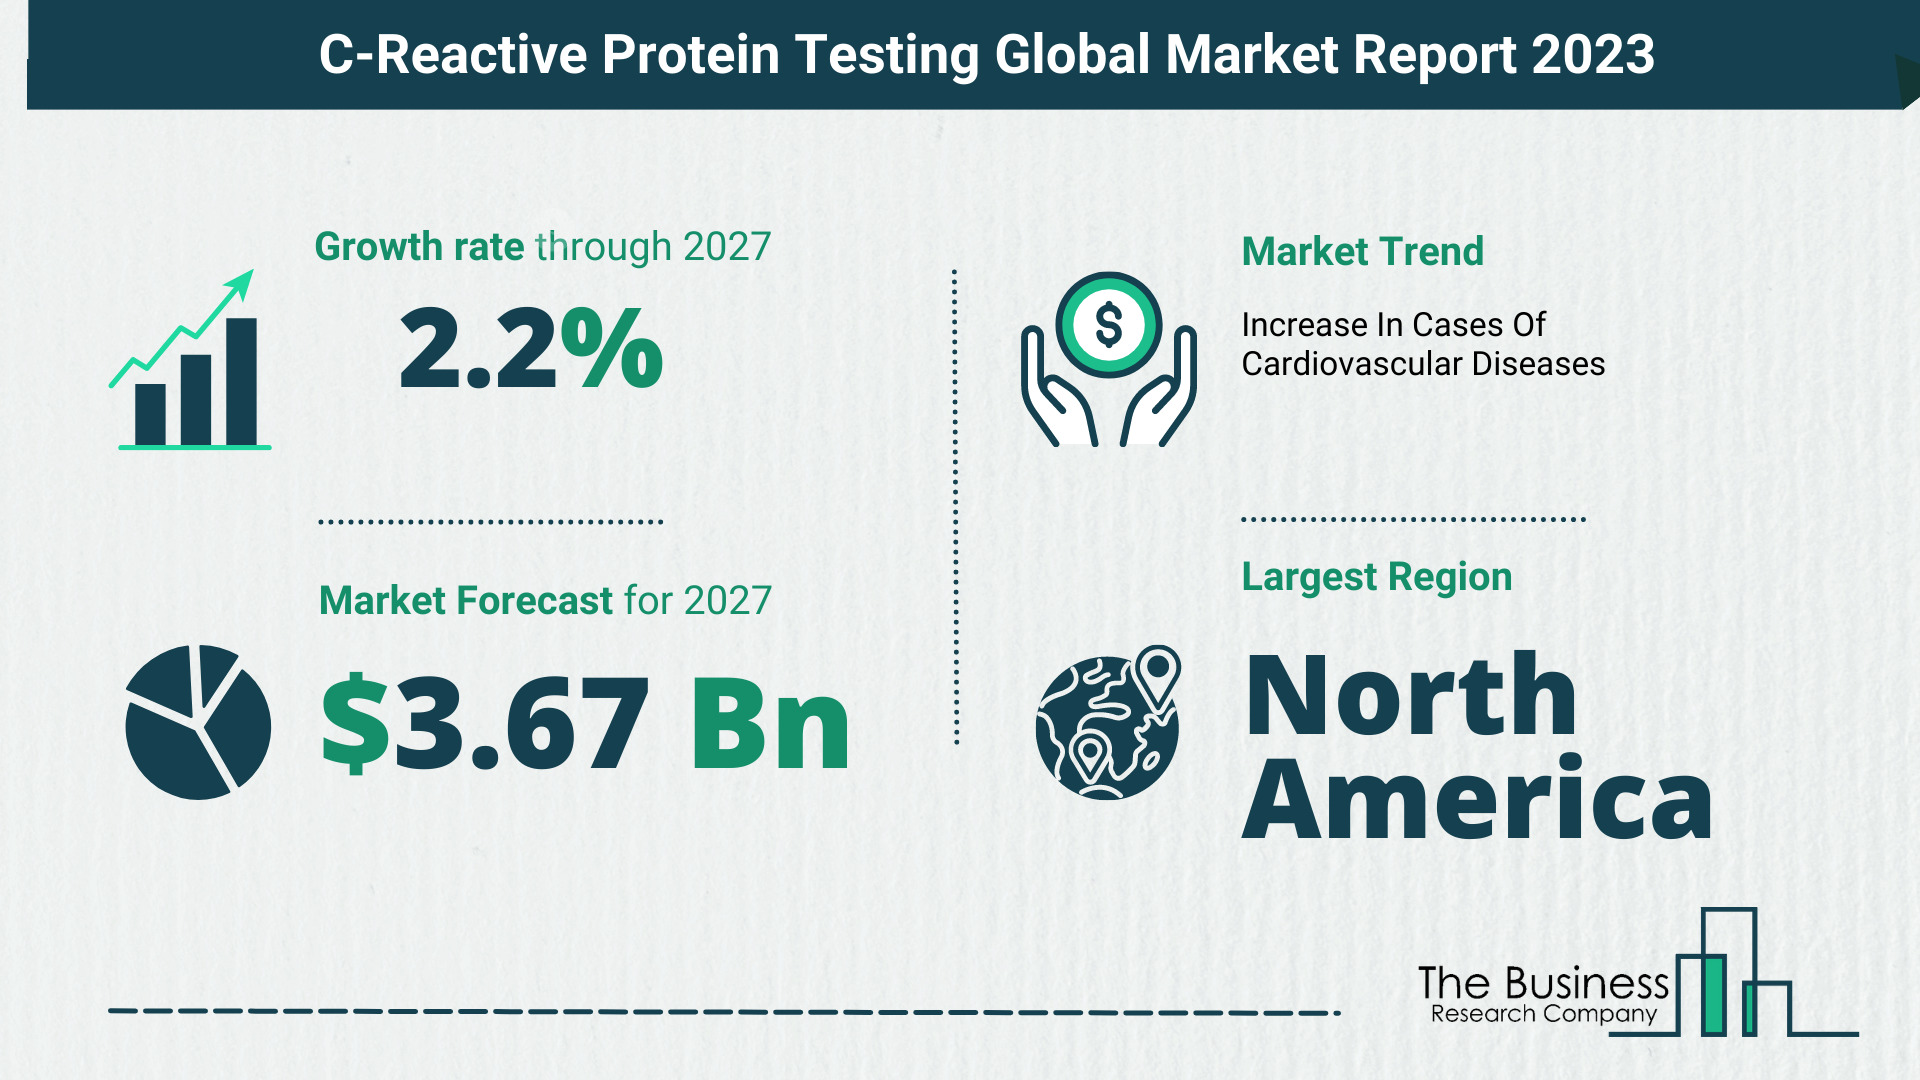 Global C-Reactive Protein Testing Market